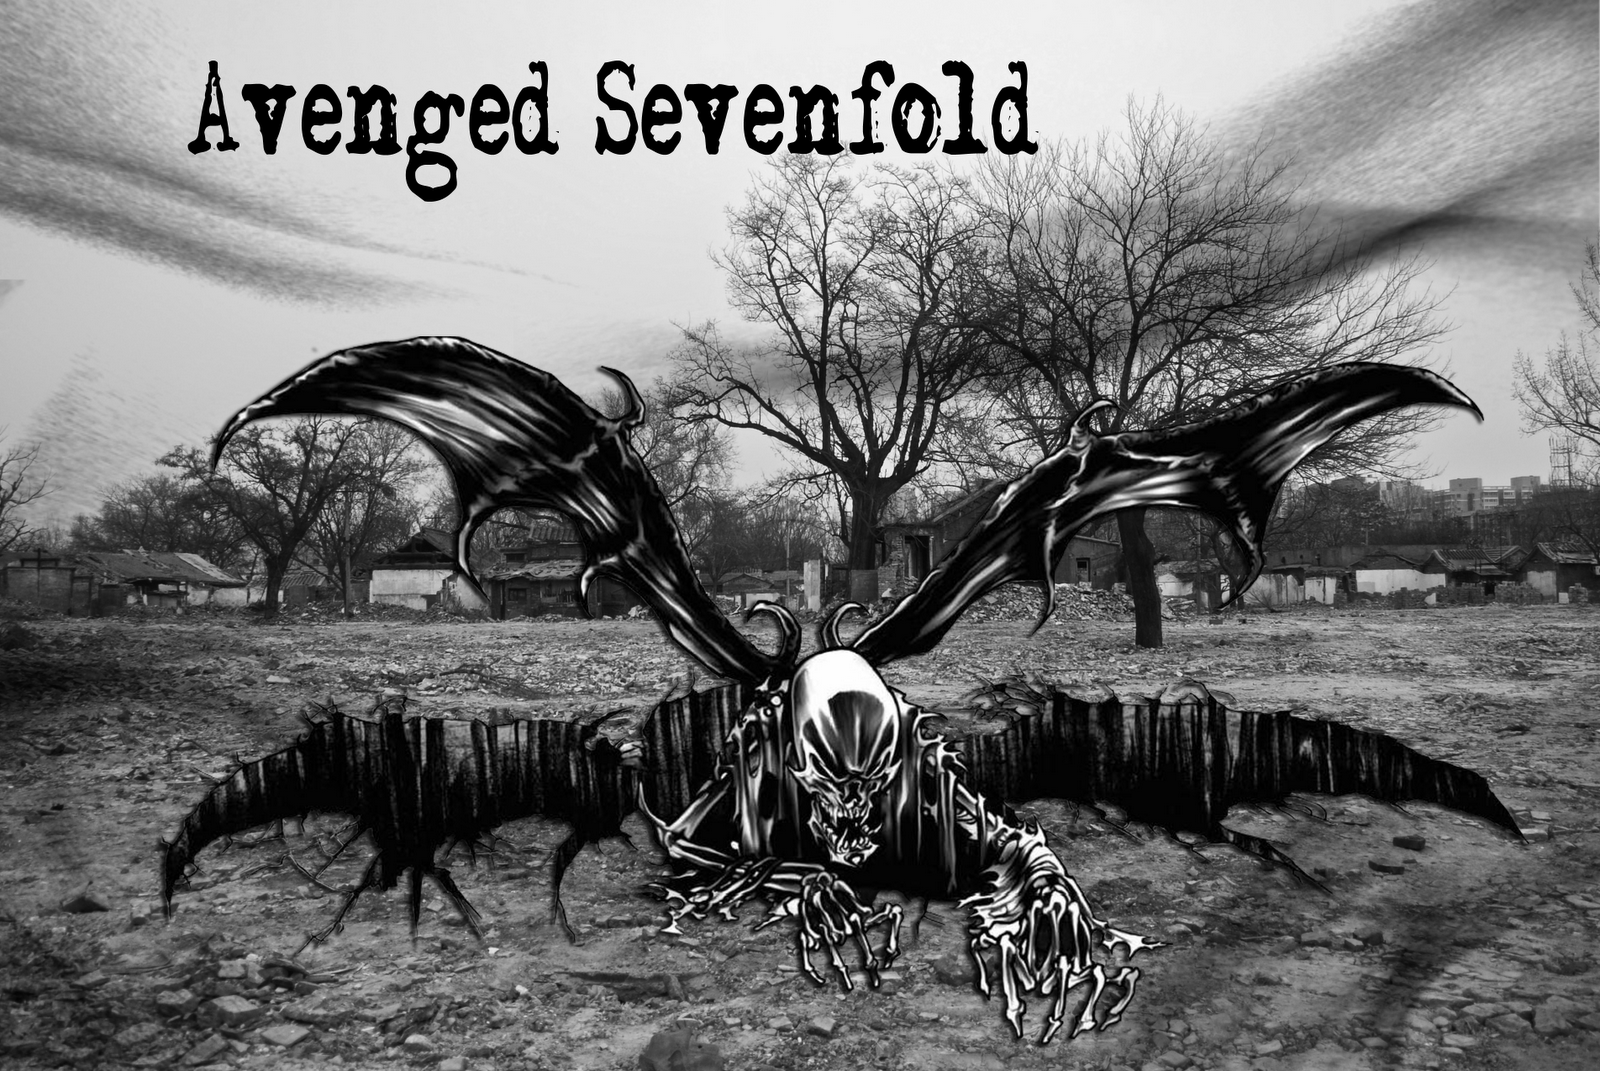 http://3.bp.blogspot.com/-fTyVKjrQz94/TdEold_LcLI/AAAAAAAAAAw/Otitet8UQKs/s1600/Avenged_Sevenfold_Death_Bat_by_bUfFcRaCkItO.png